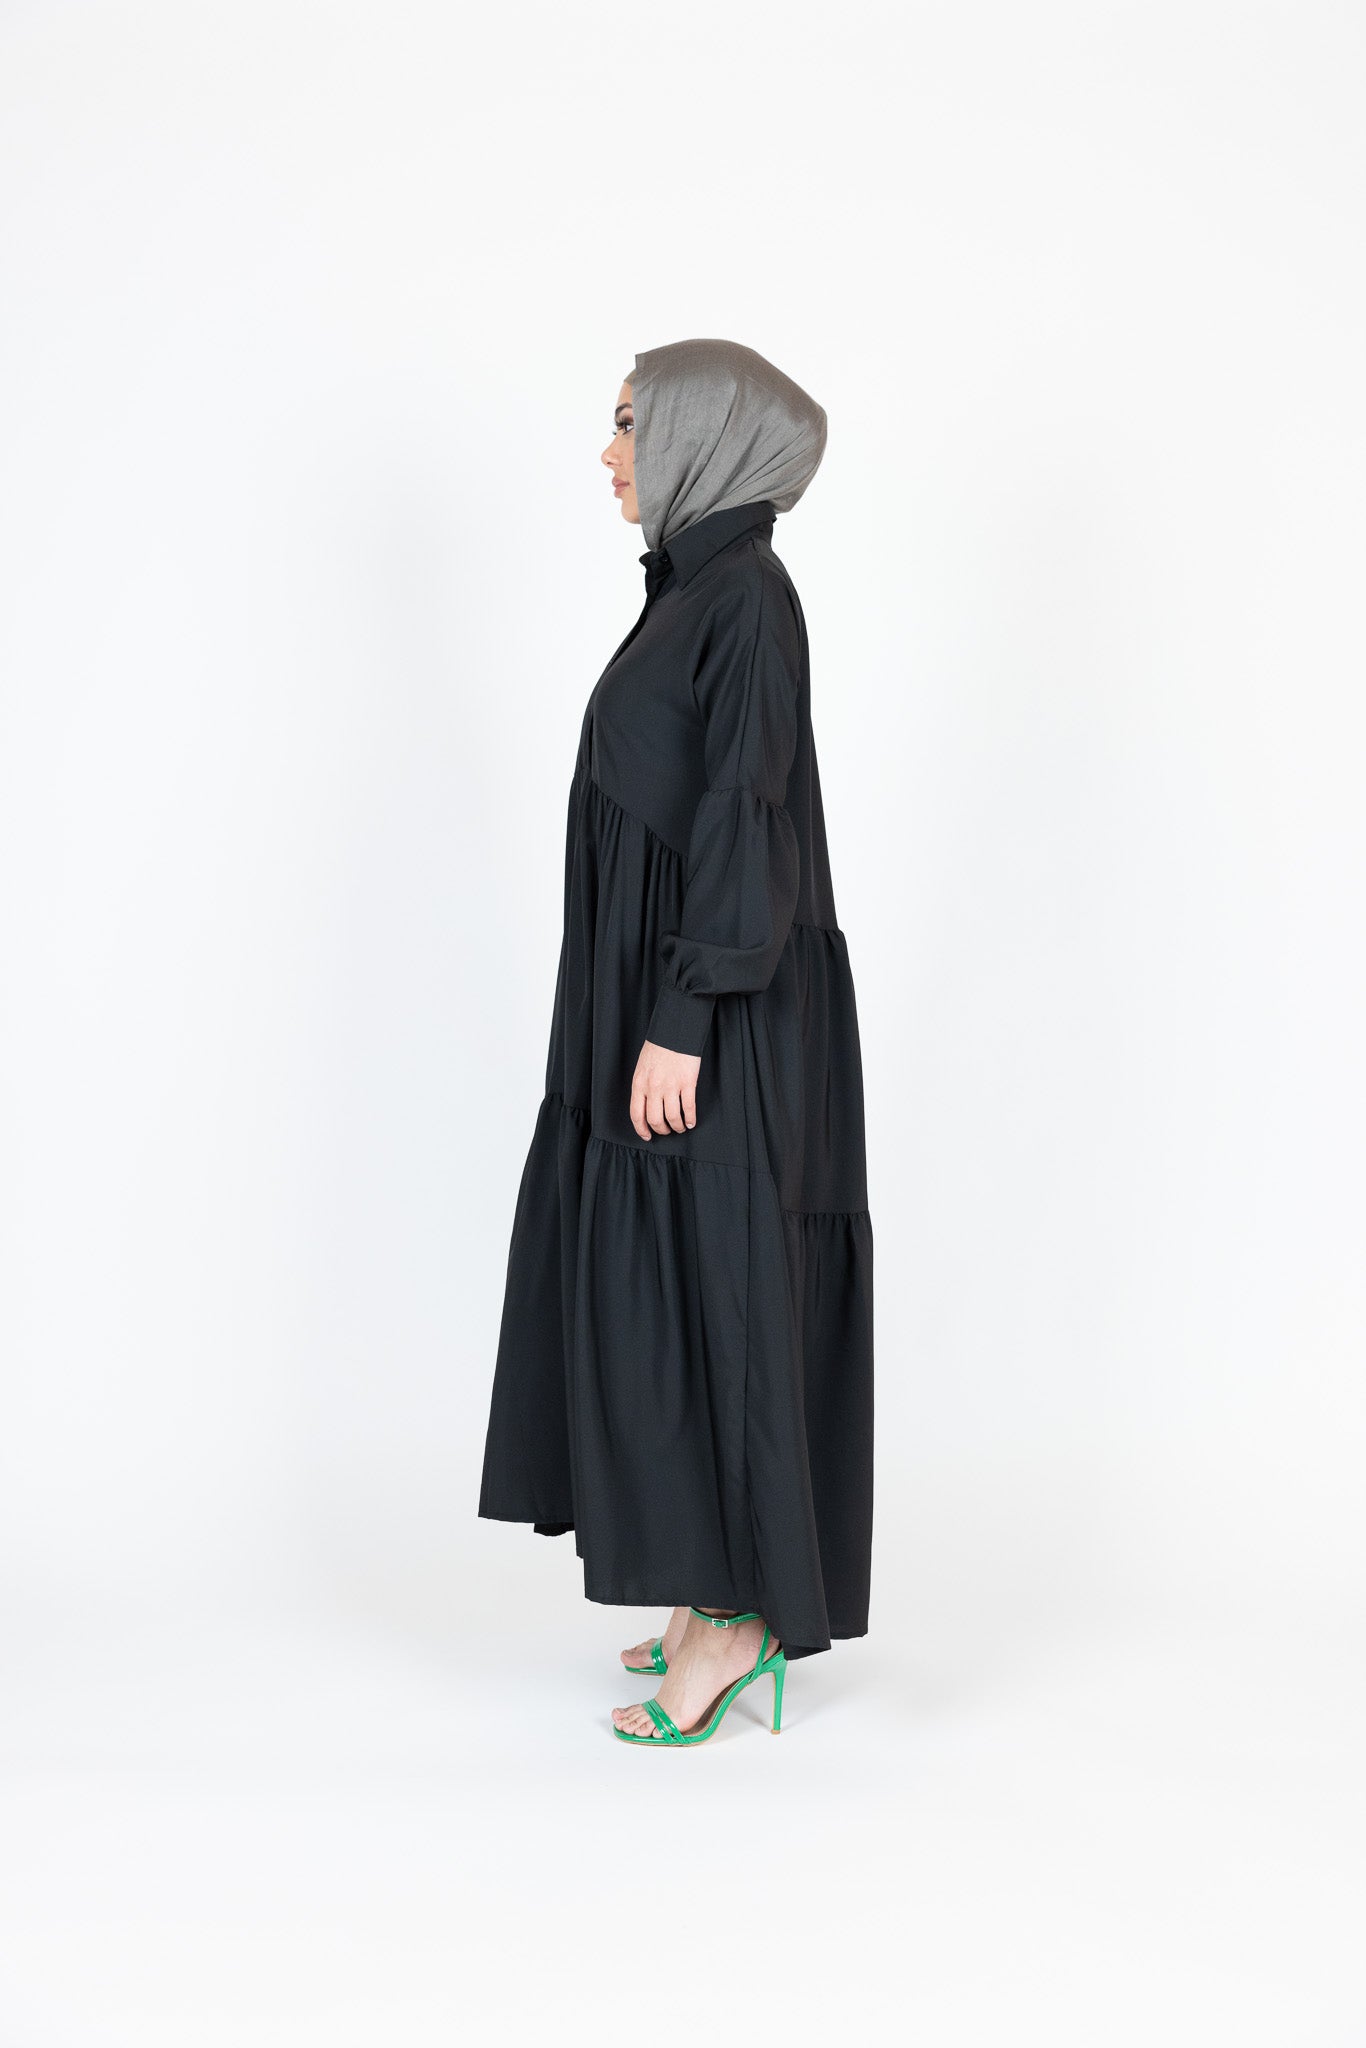 WS00373Black-dress-abaya